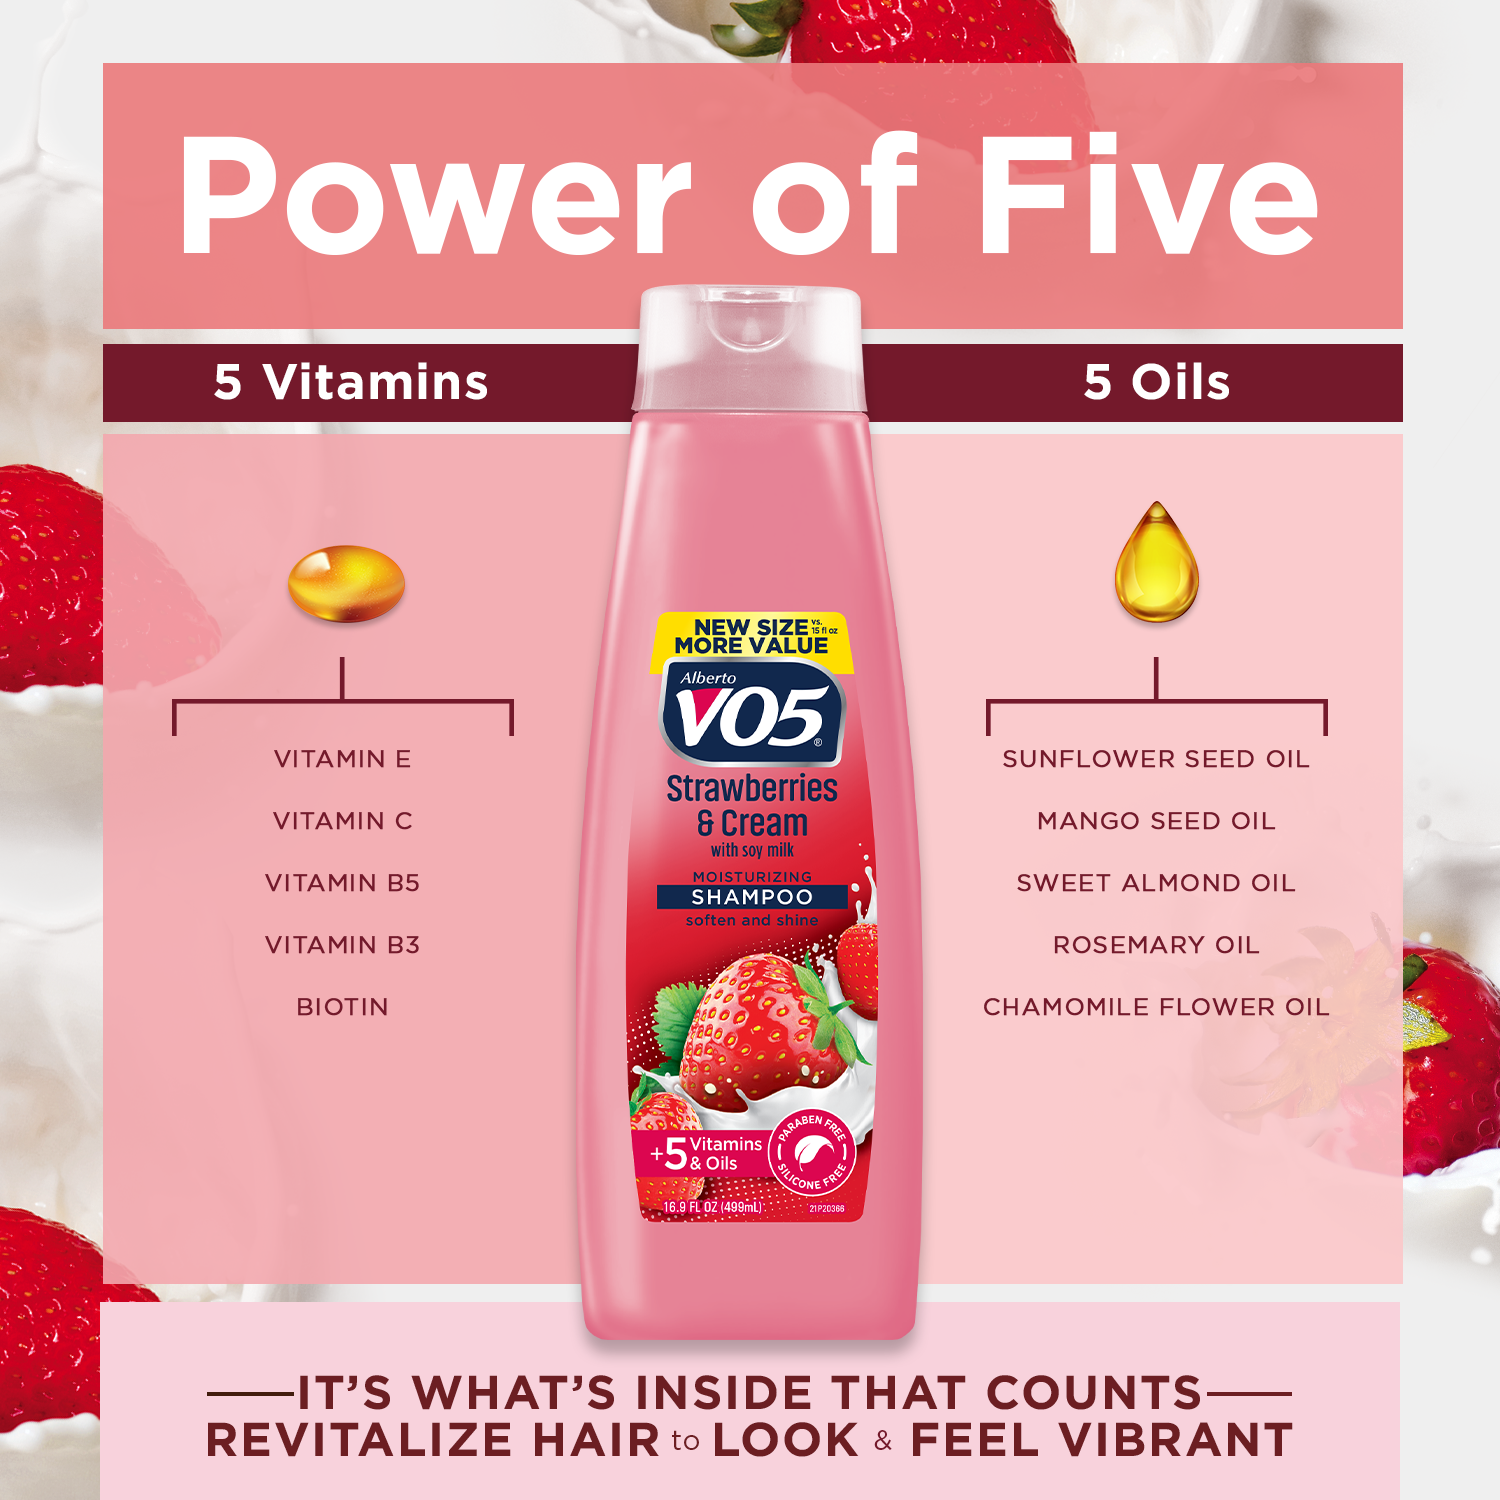 Alberto VO5 Strawberries & Cream Moisturizing Shampoo with Soy Milk, for All Hair Types, 16.9 fl oz - image 4 of 6